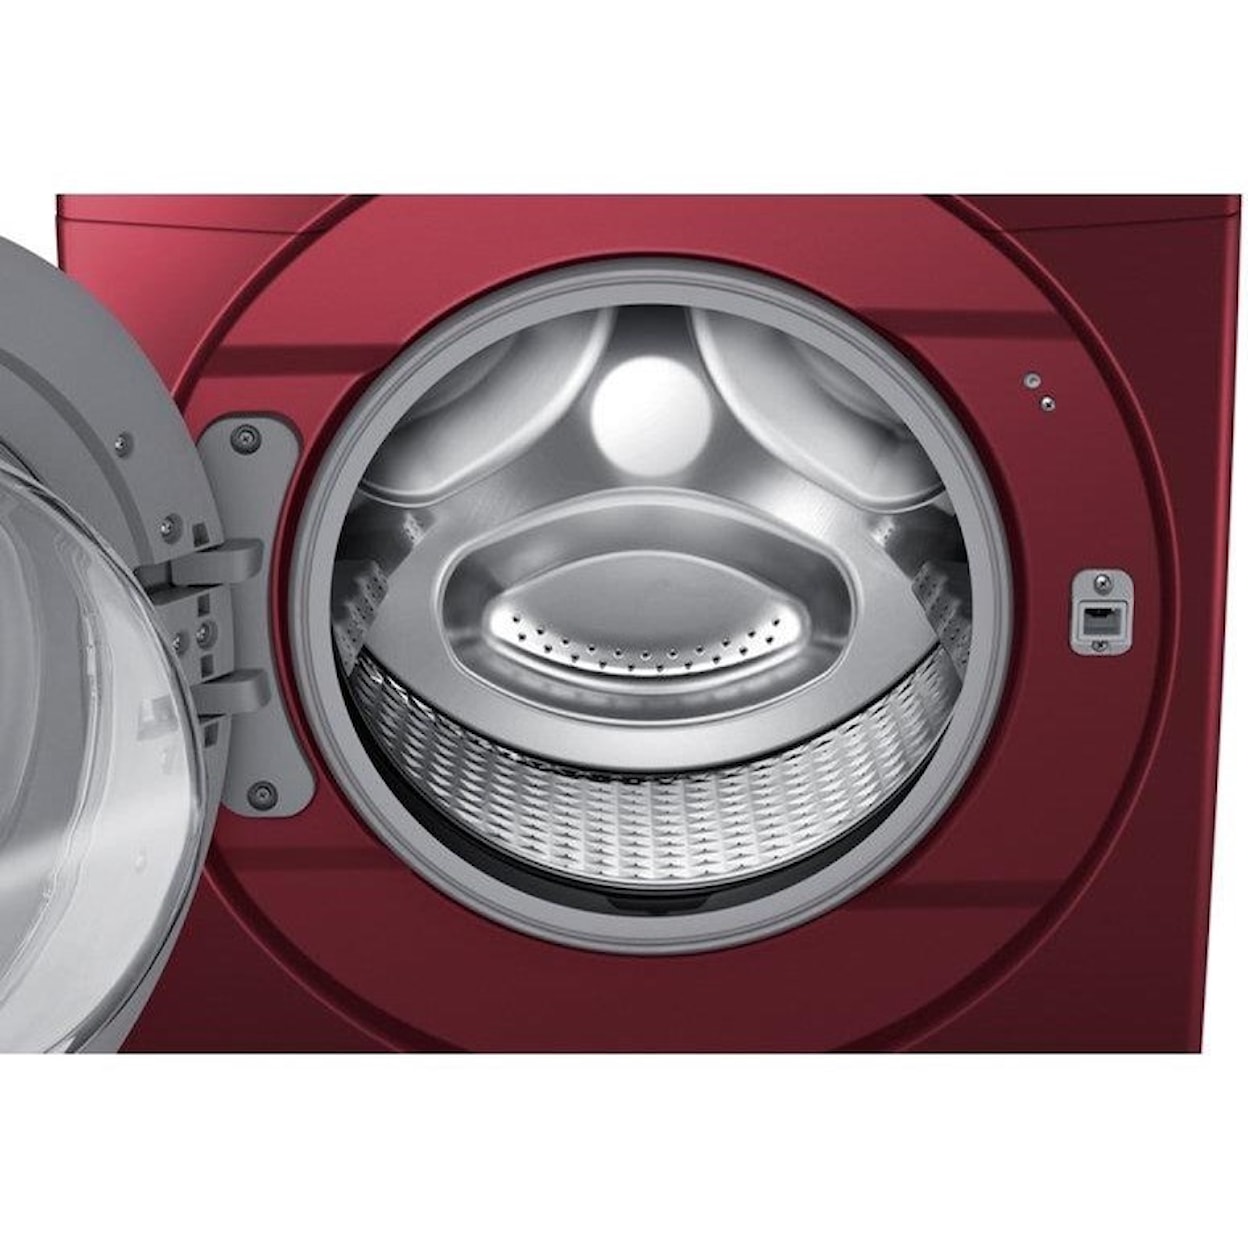 Samsung Appliances Washers- Samsung WF5300 4.5 cf Front Load Washer